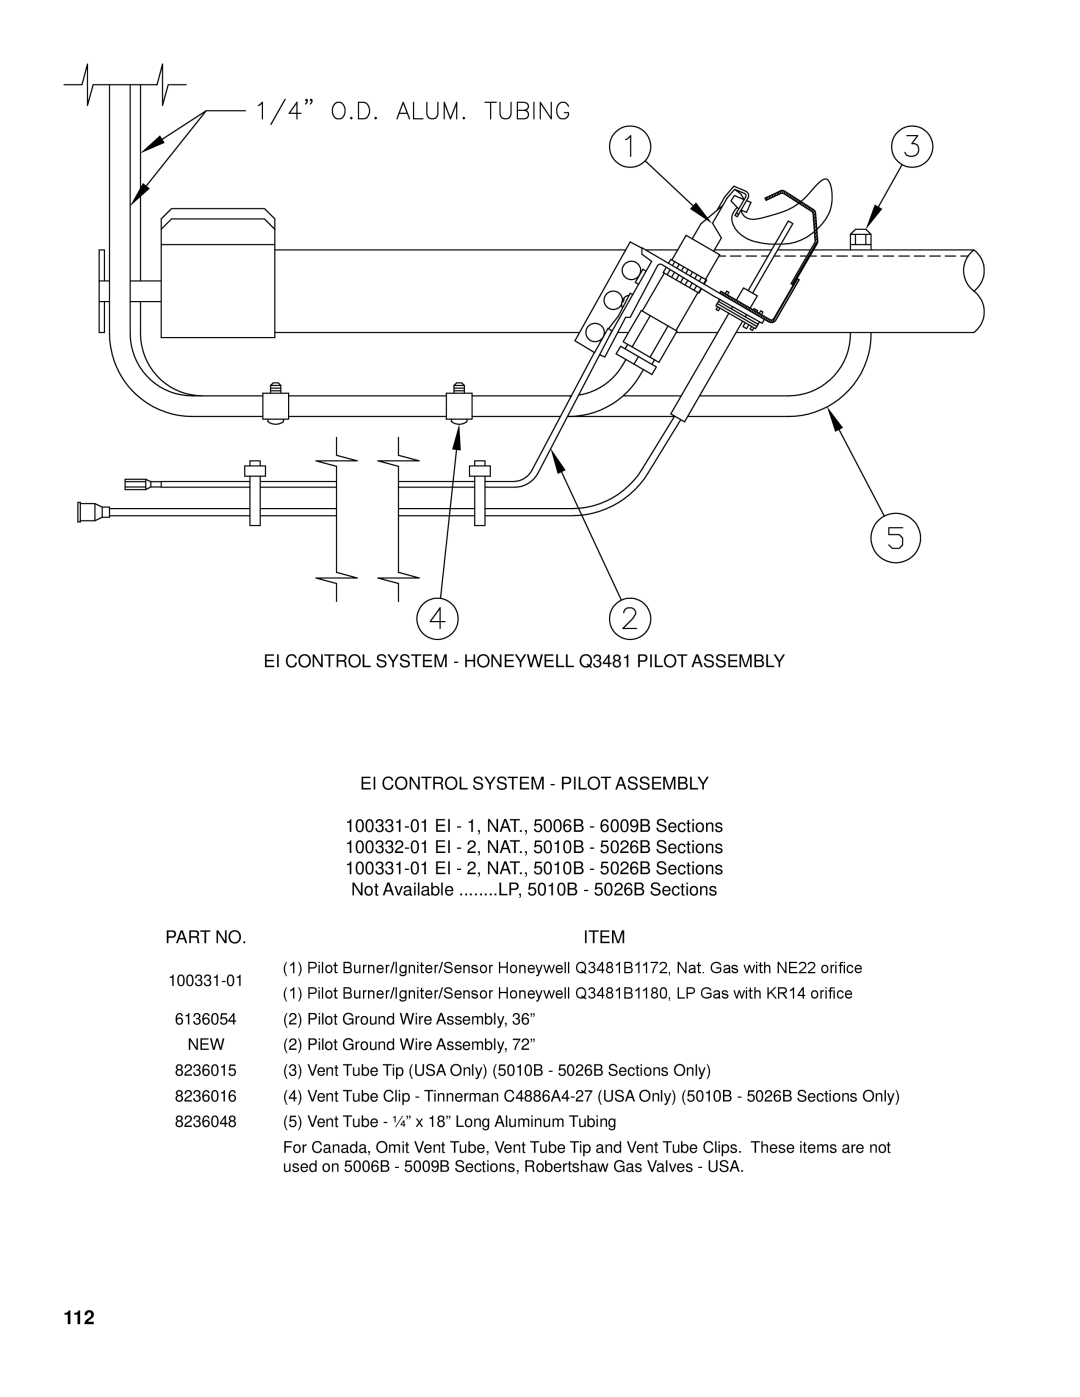 Burnham K50 manual 112, EI Control System Pilot Assembly 